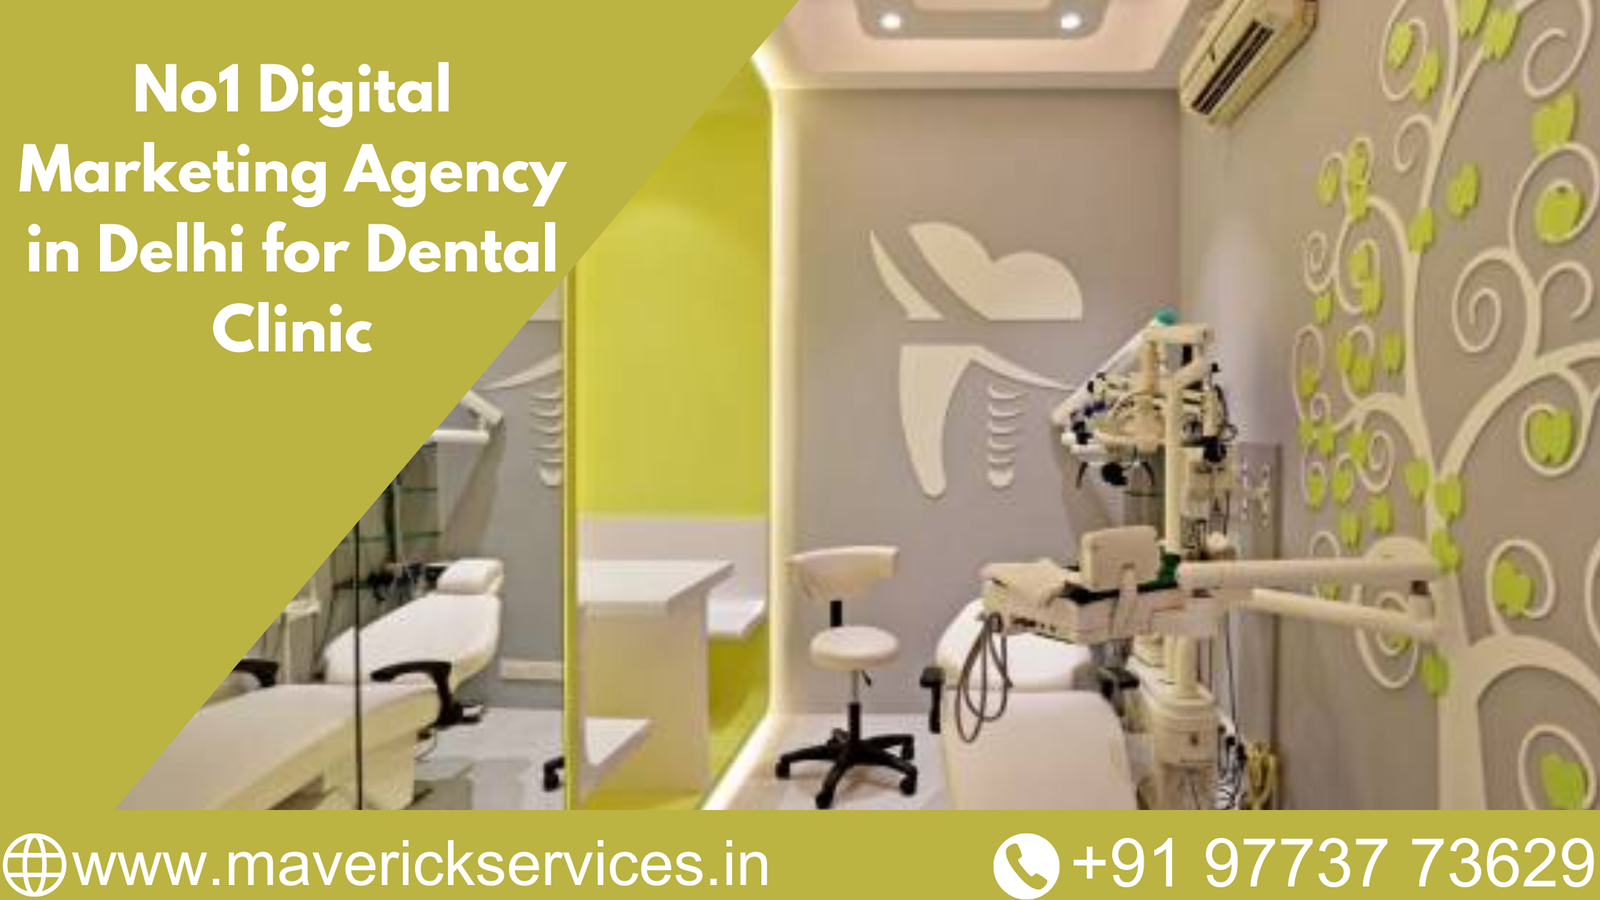 No1 Digital Marketing Agency in Delhi for Dental Clinic